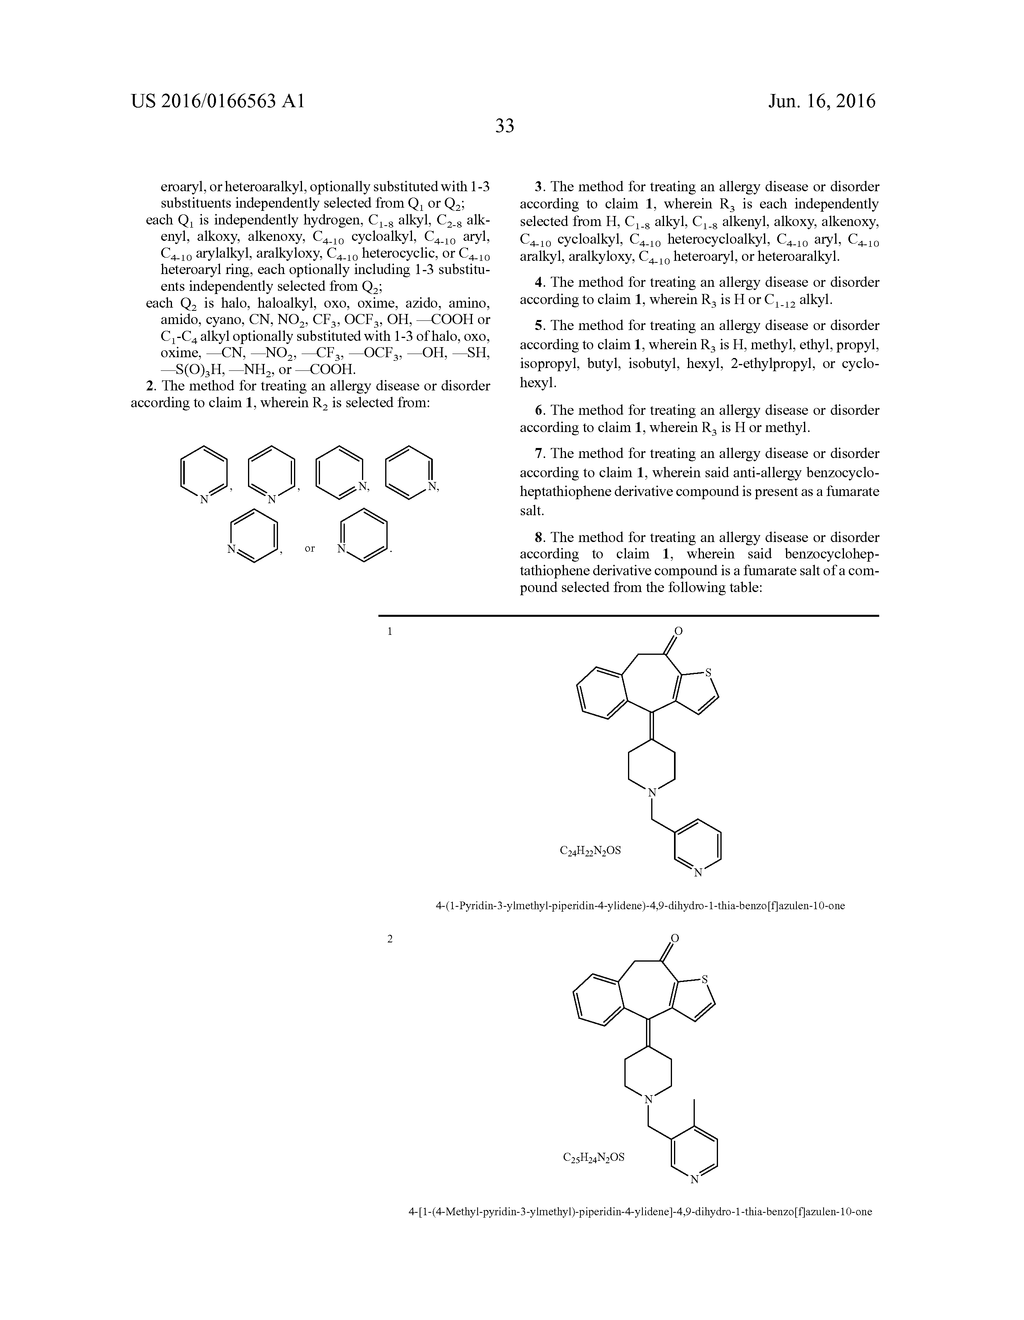 Anti-Allergy Benzocycloheptathiophene Derivatives - diagram, schematic, and image 38